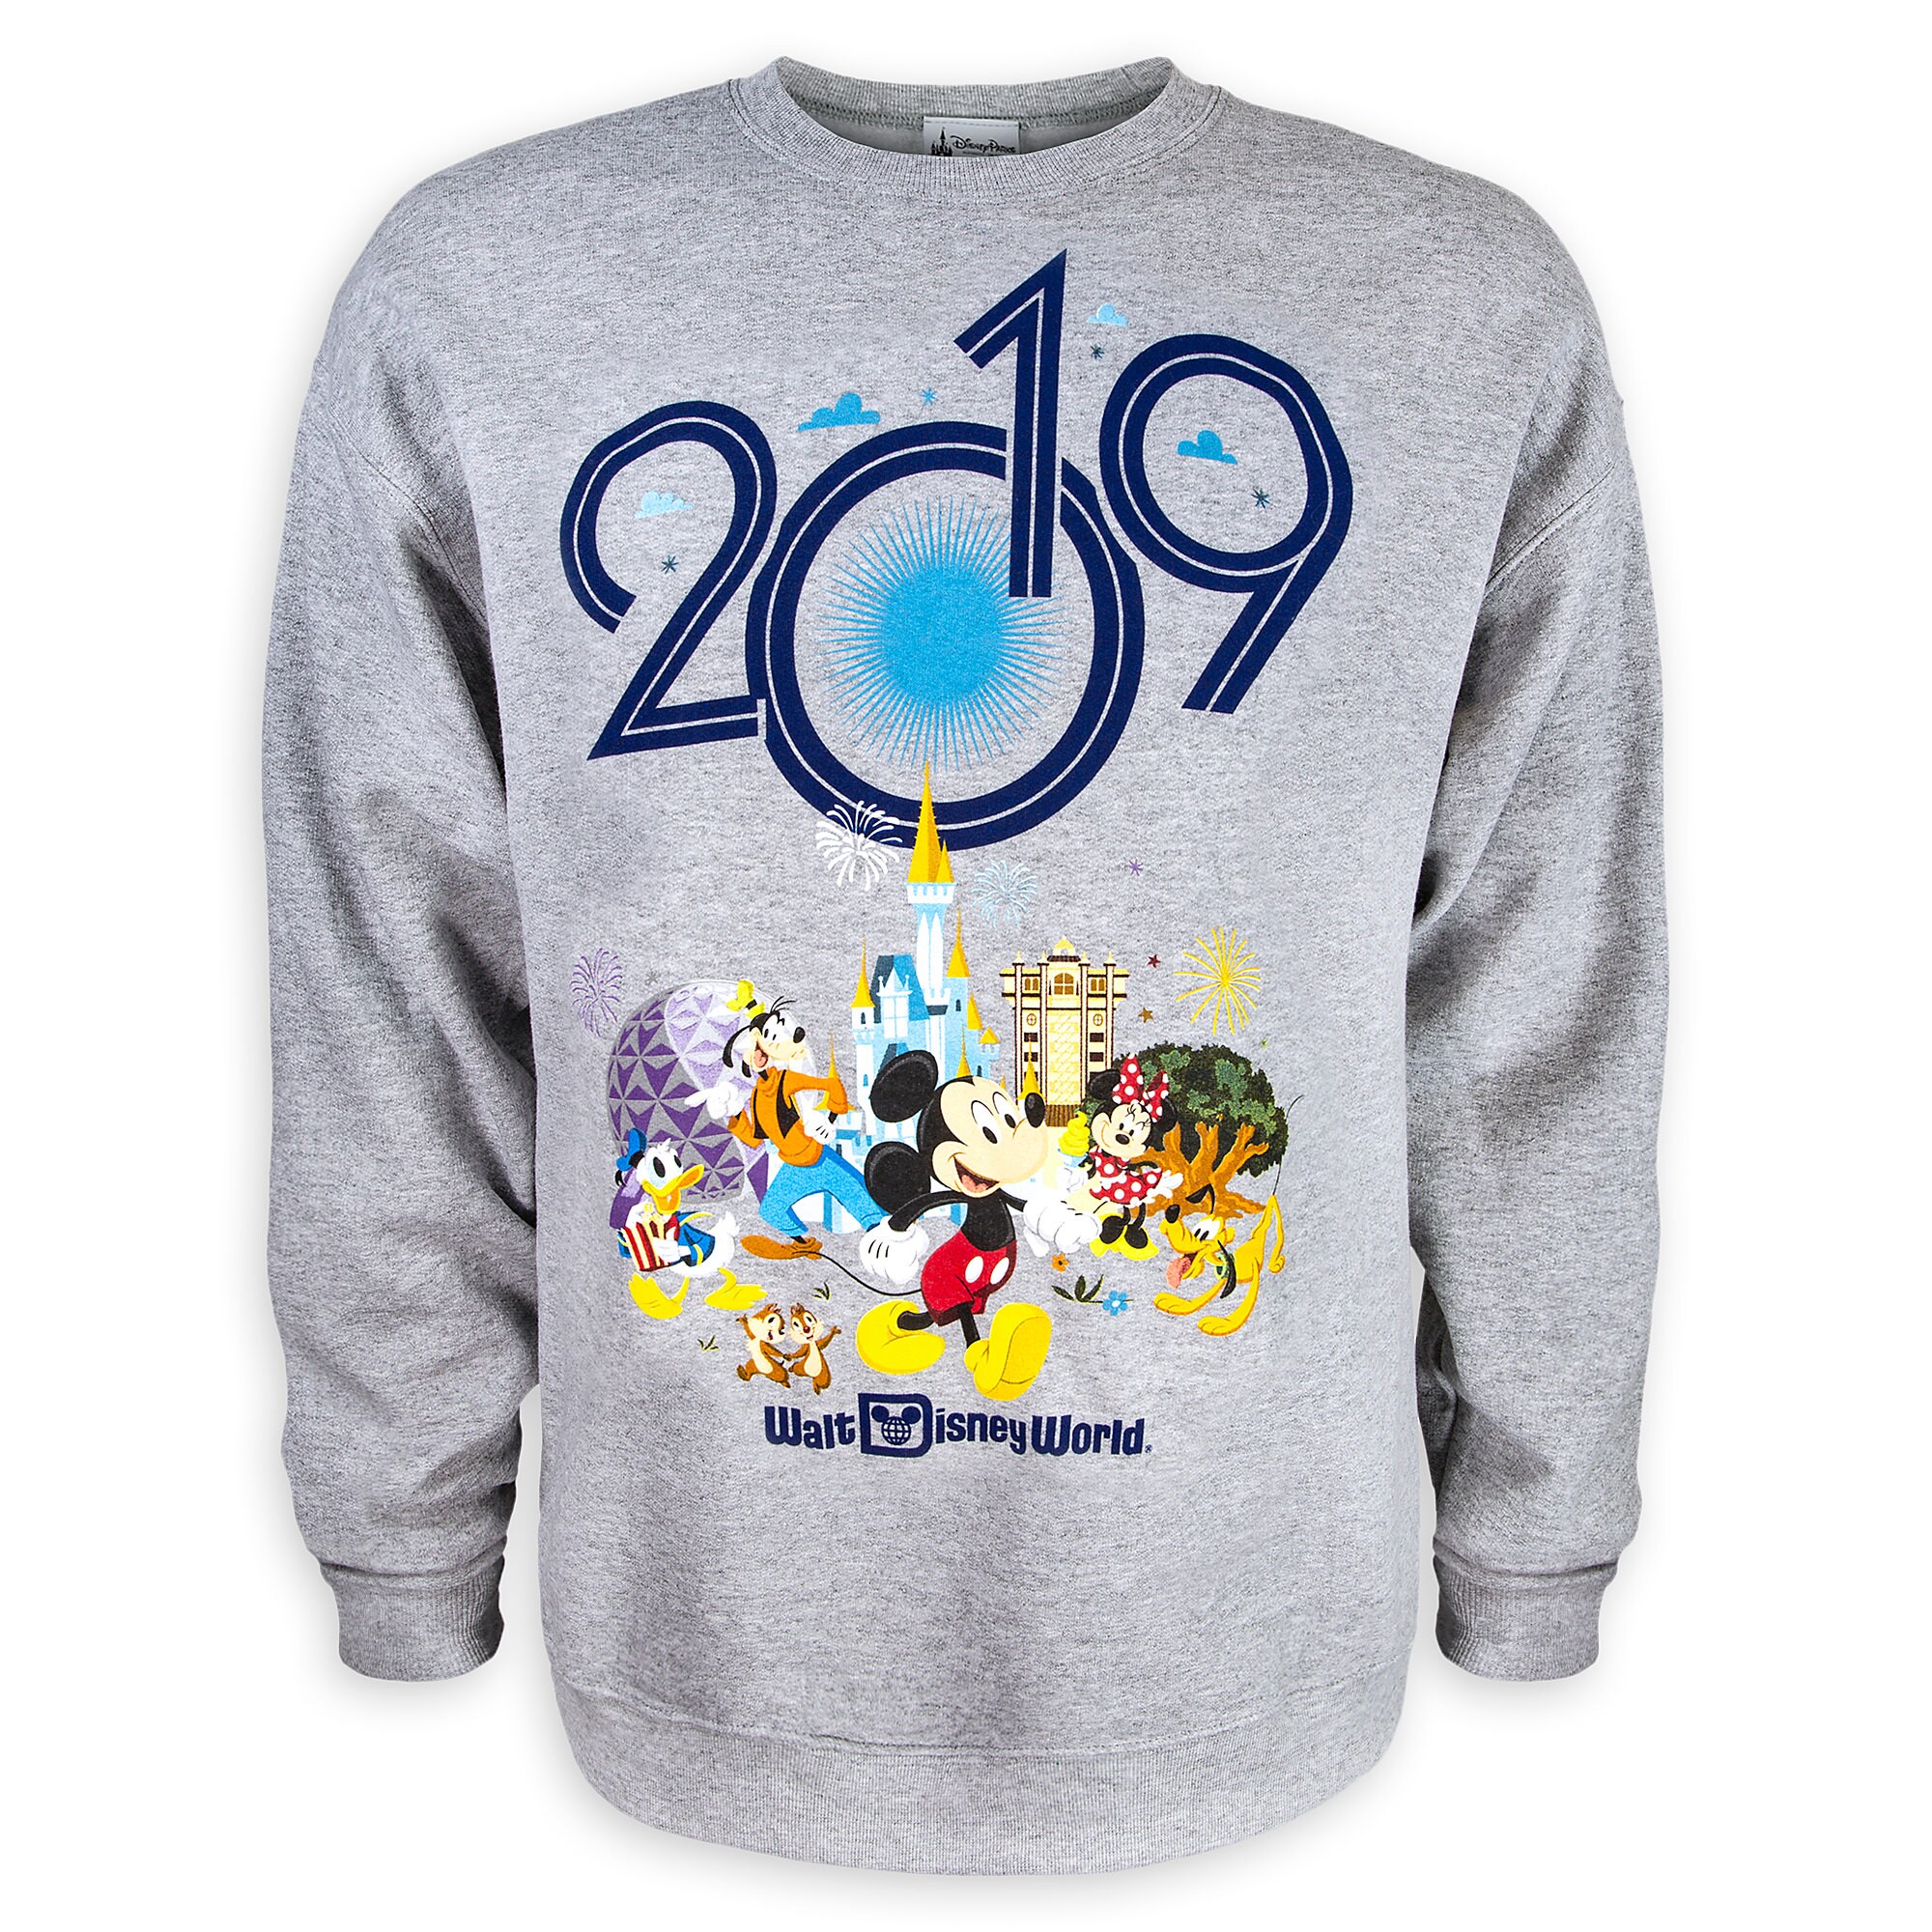 Mickey Mouse and Friends Fleece Sweatshirt for Adults - Walt Disney World 2019